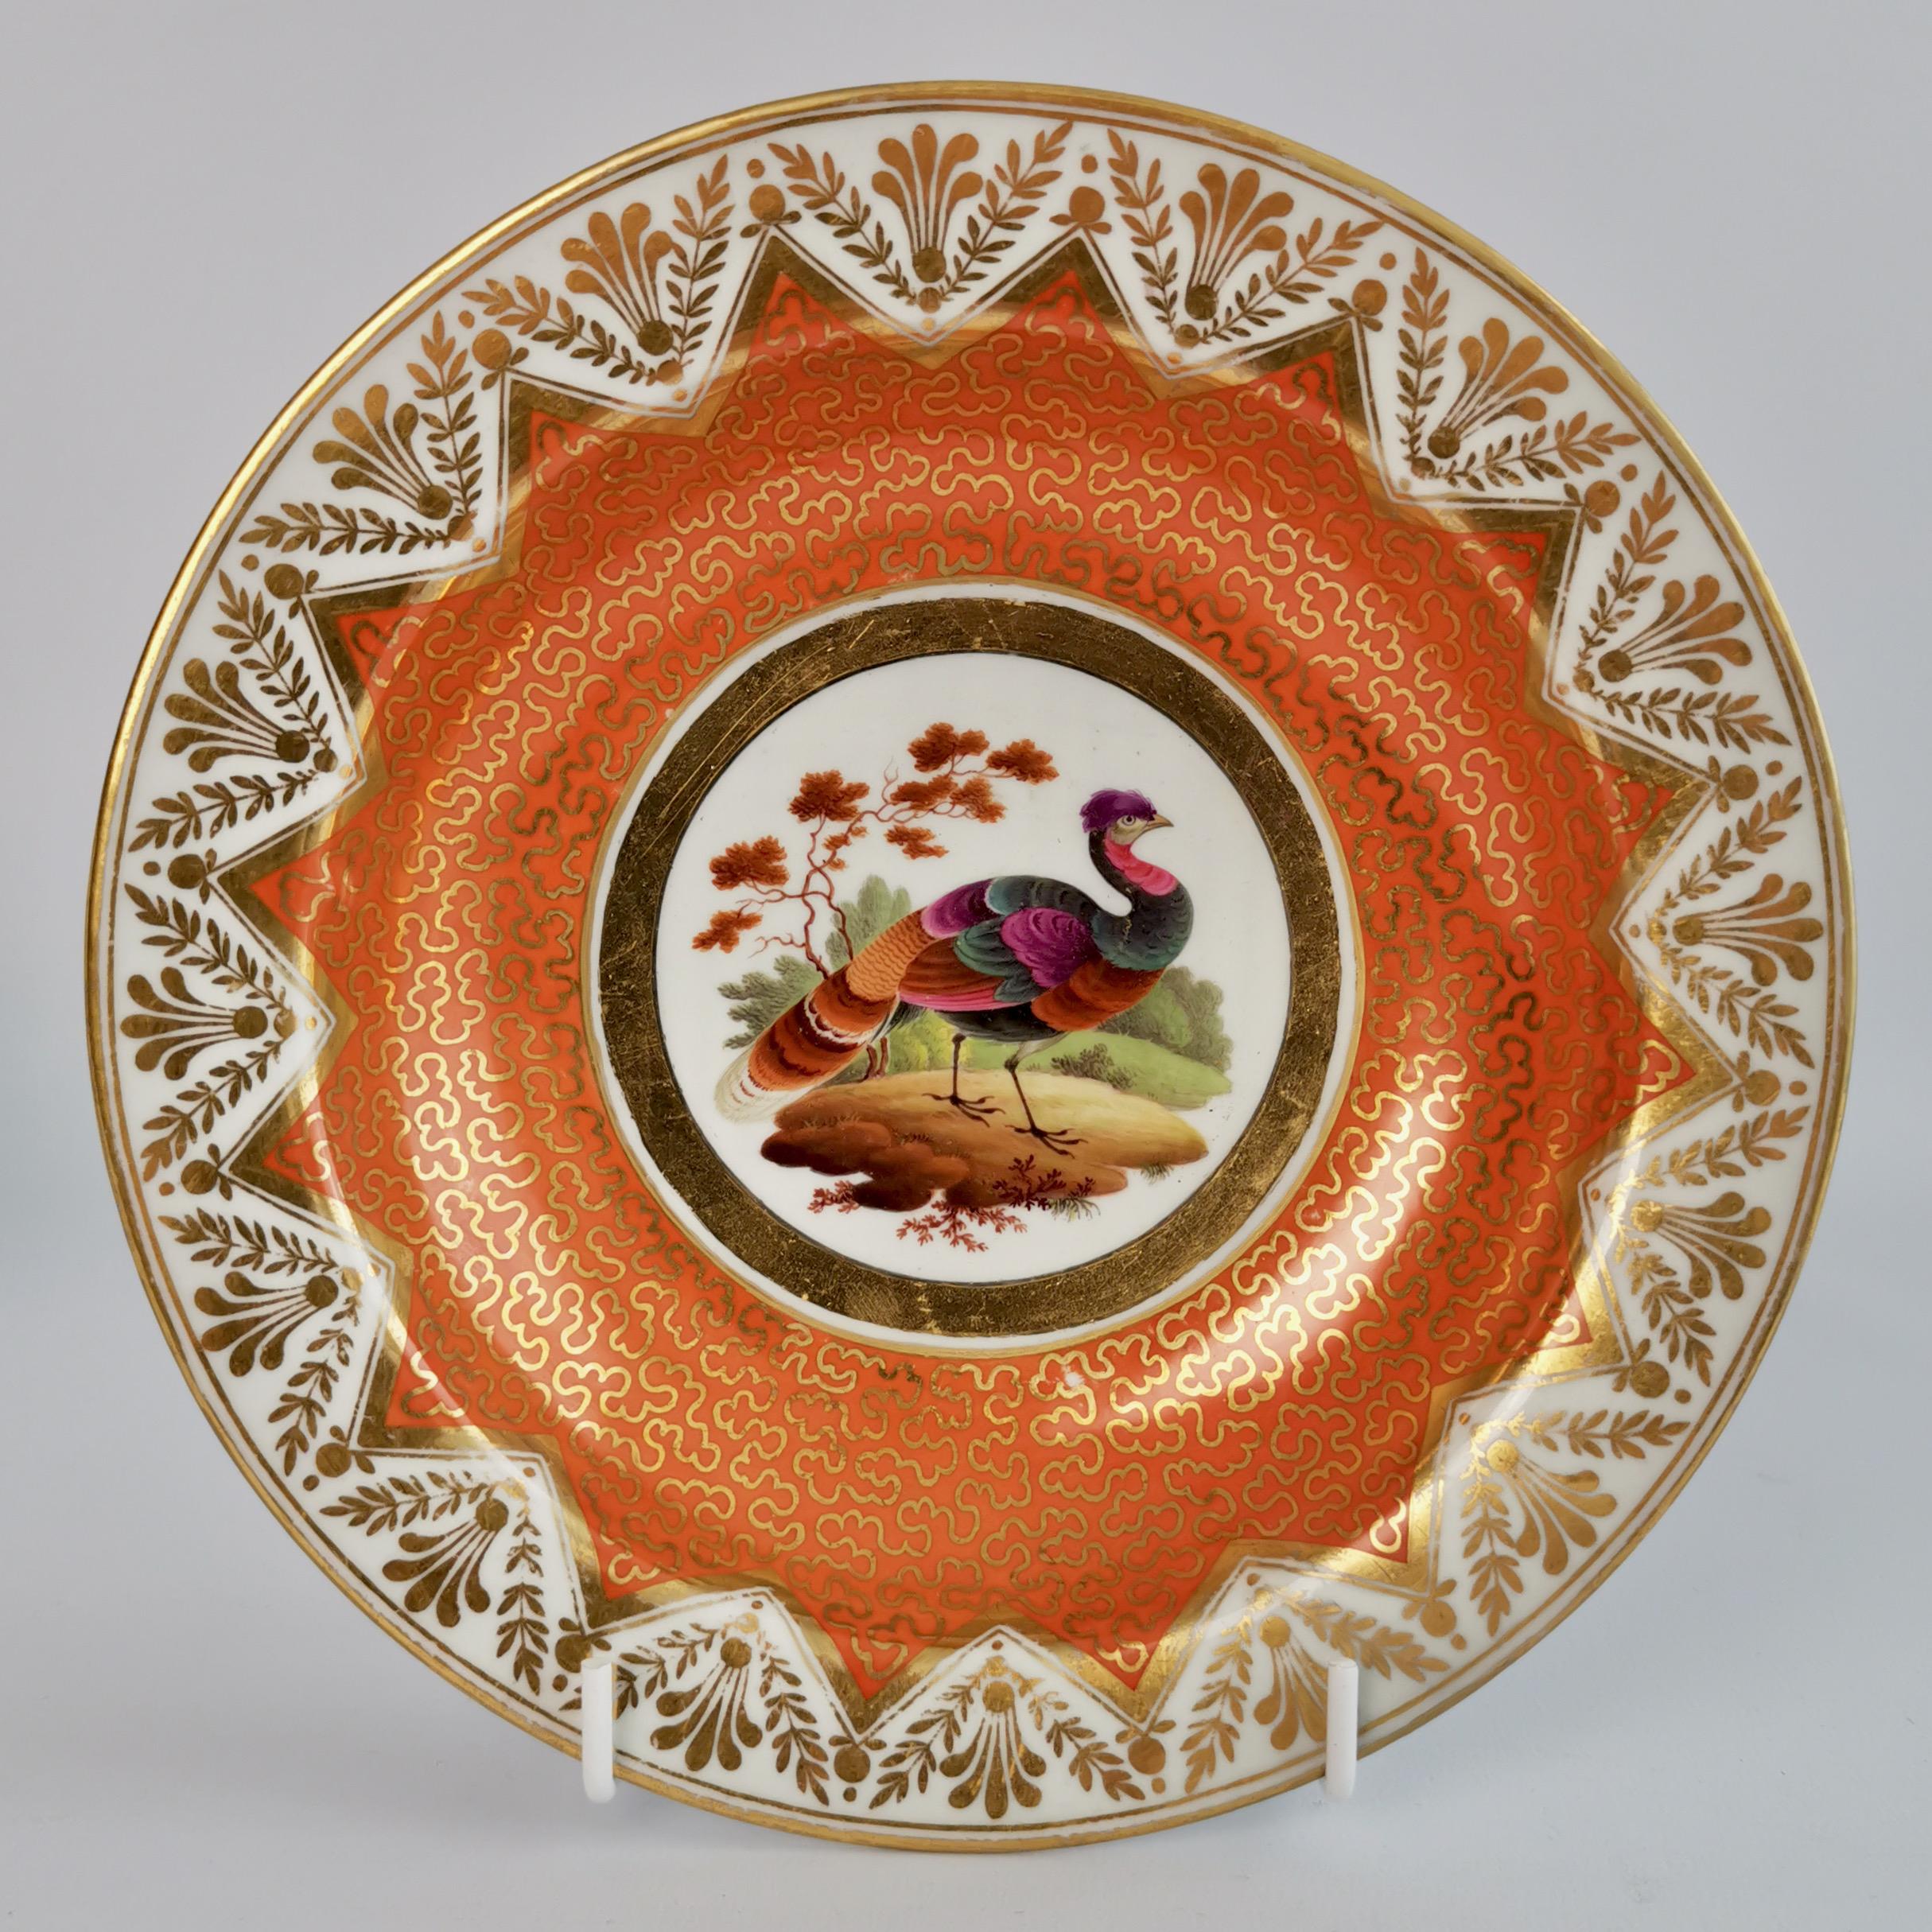 Chamberlains Worcester Porcelain Dessert Service, Orange, Regency, circa 1815 5